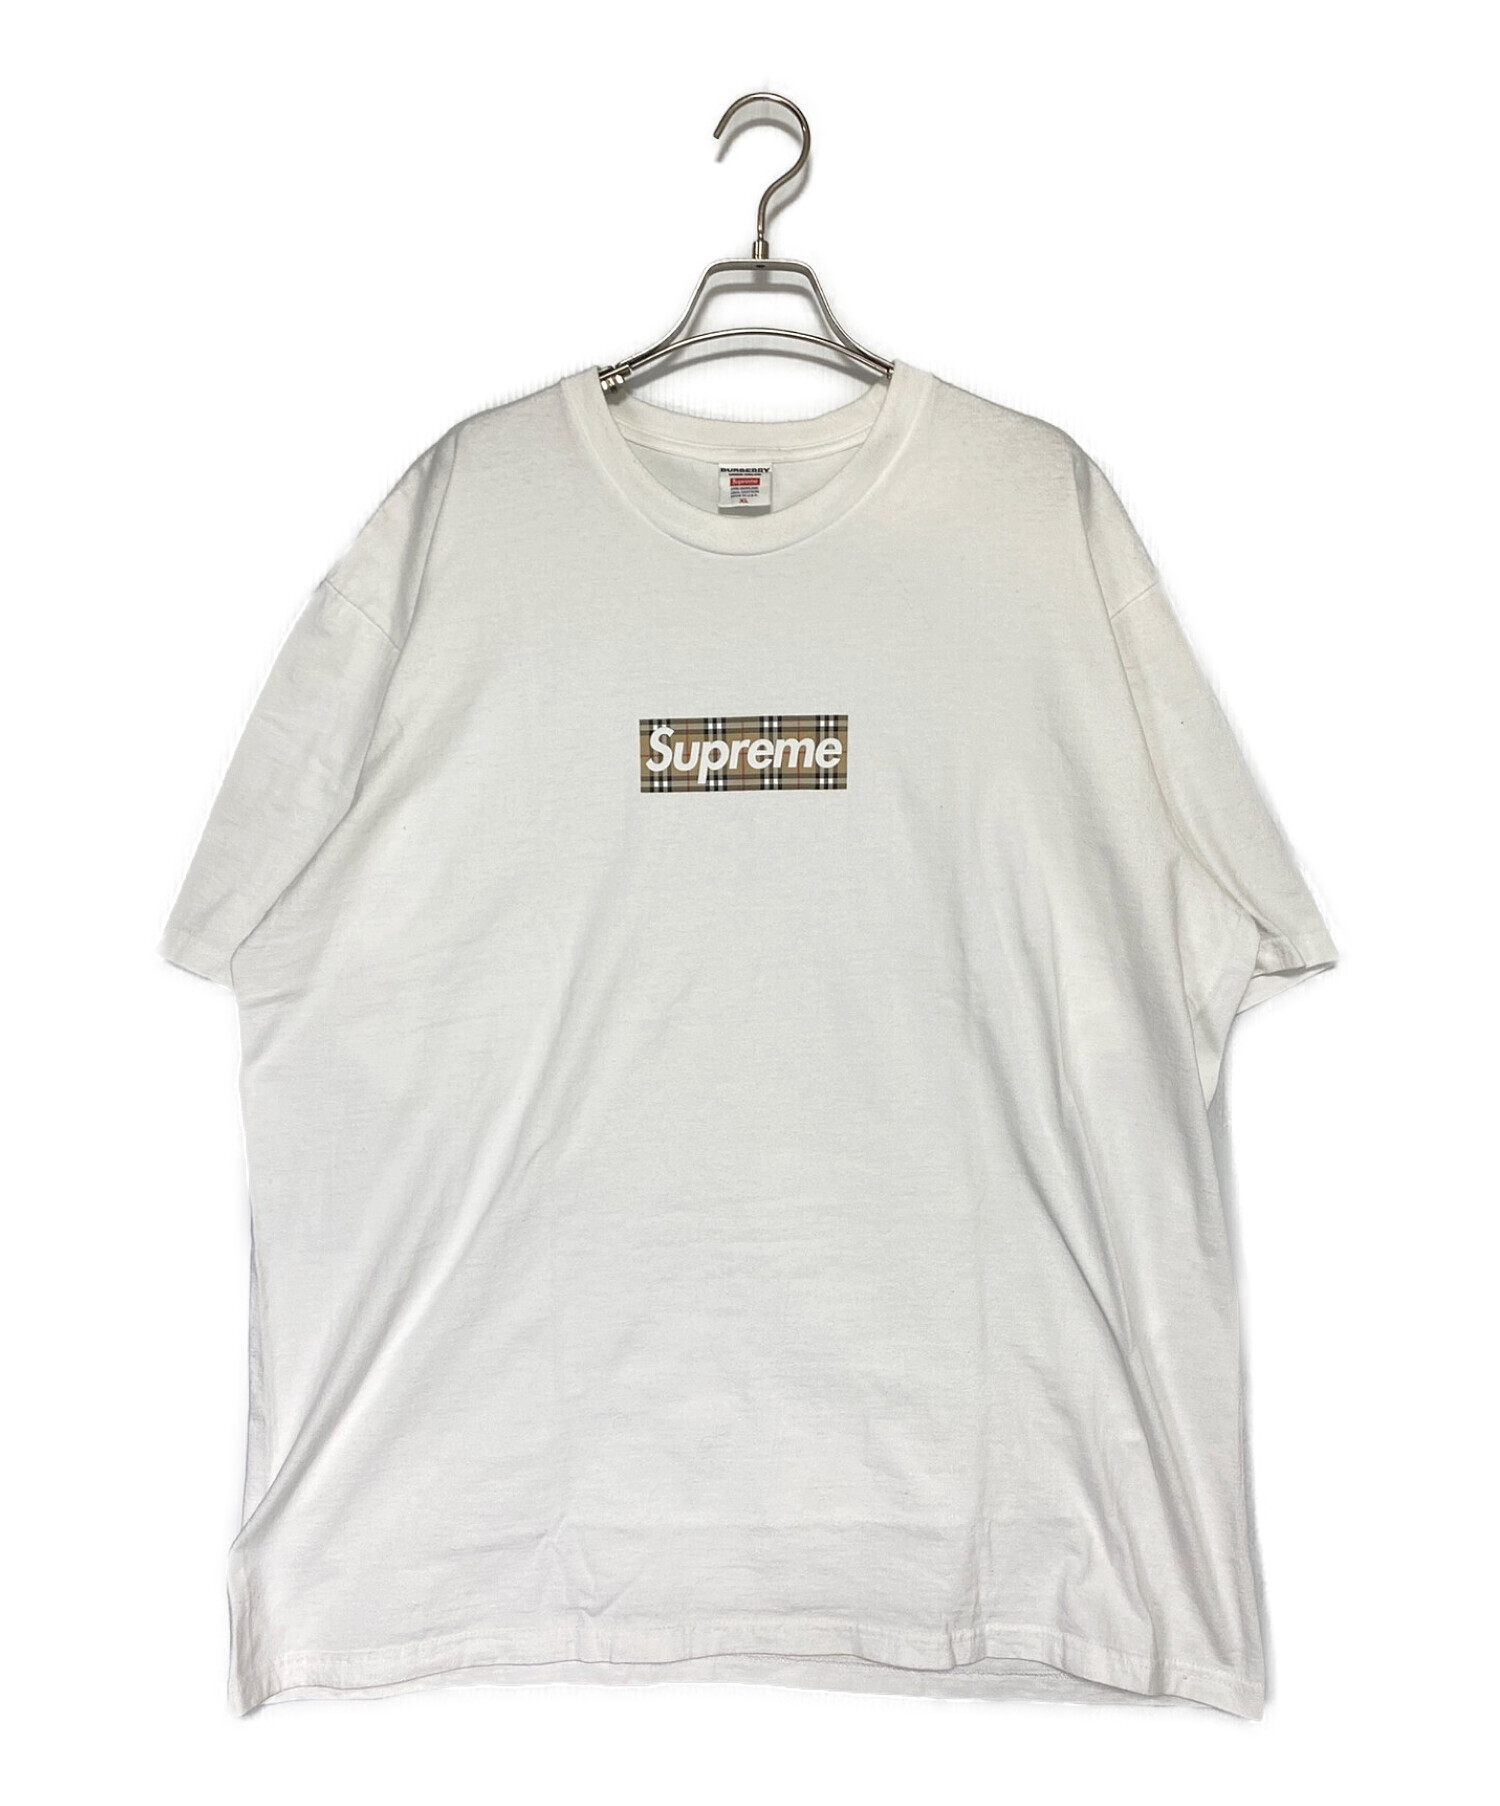 SUPREME (シュプリーム) BURBERRY (バーバリー) BOX LOGO Tシャツ ホワイト サイズ:XL